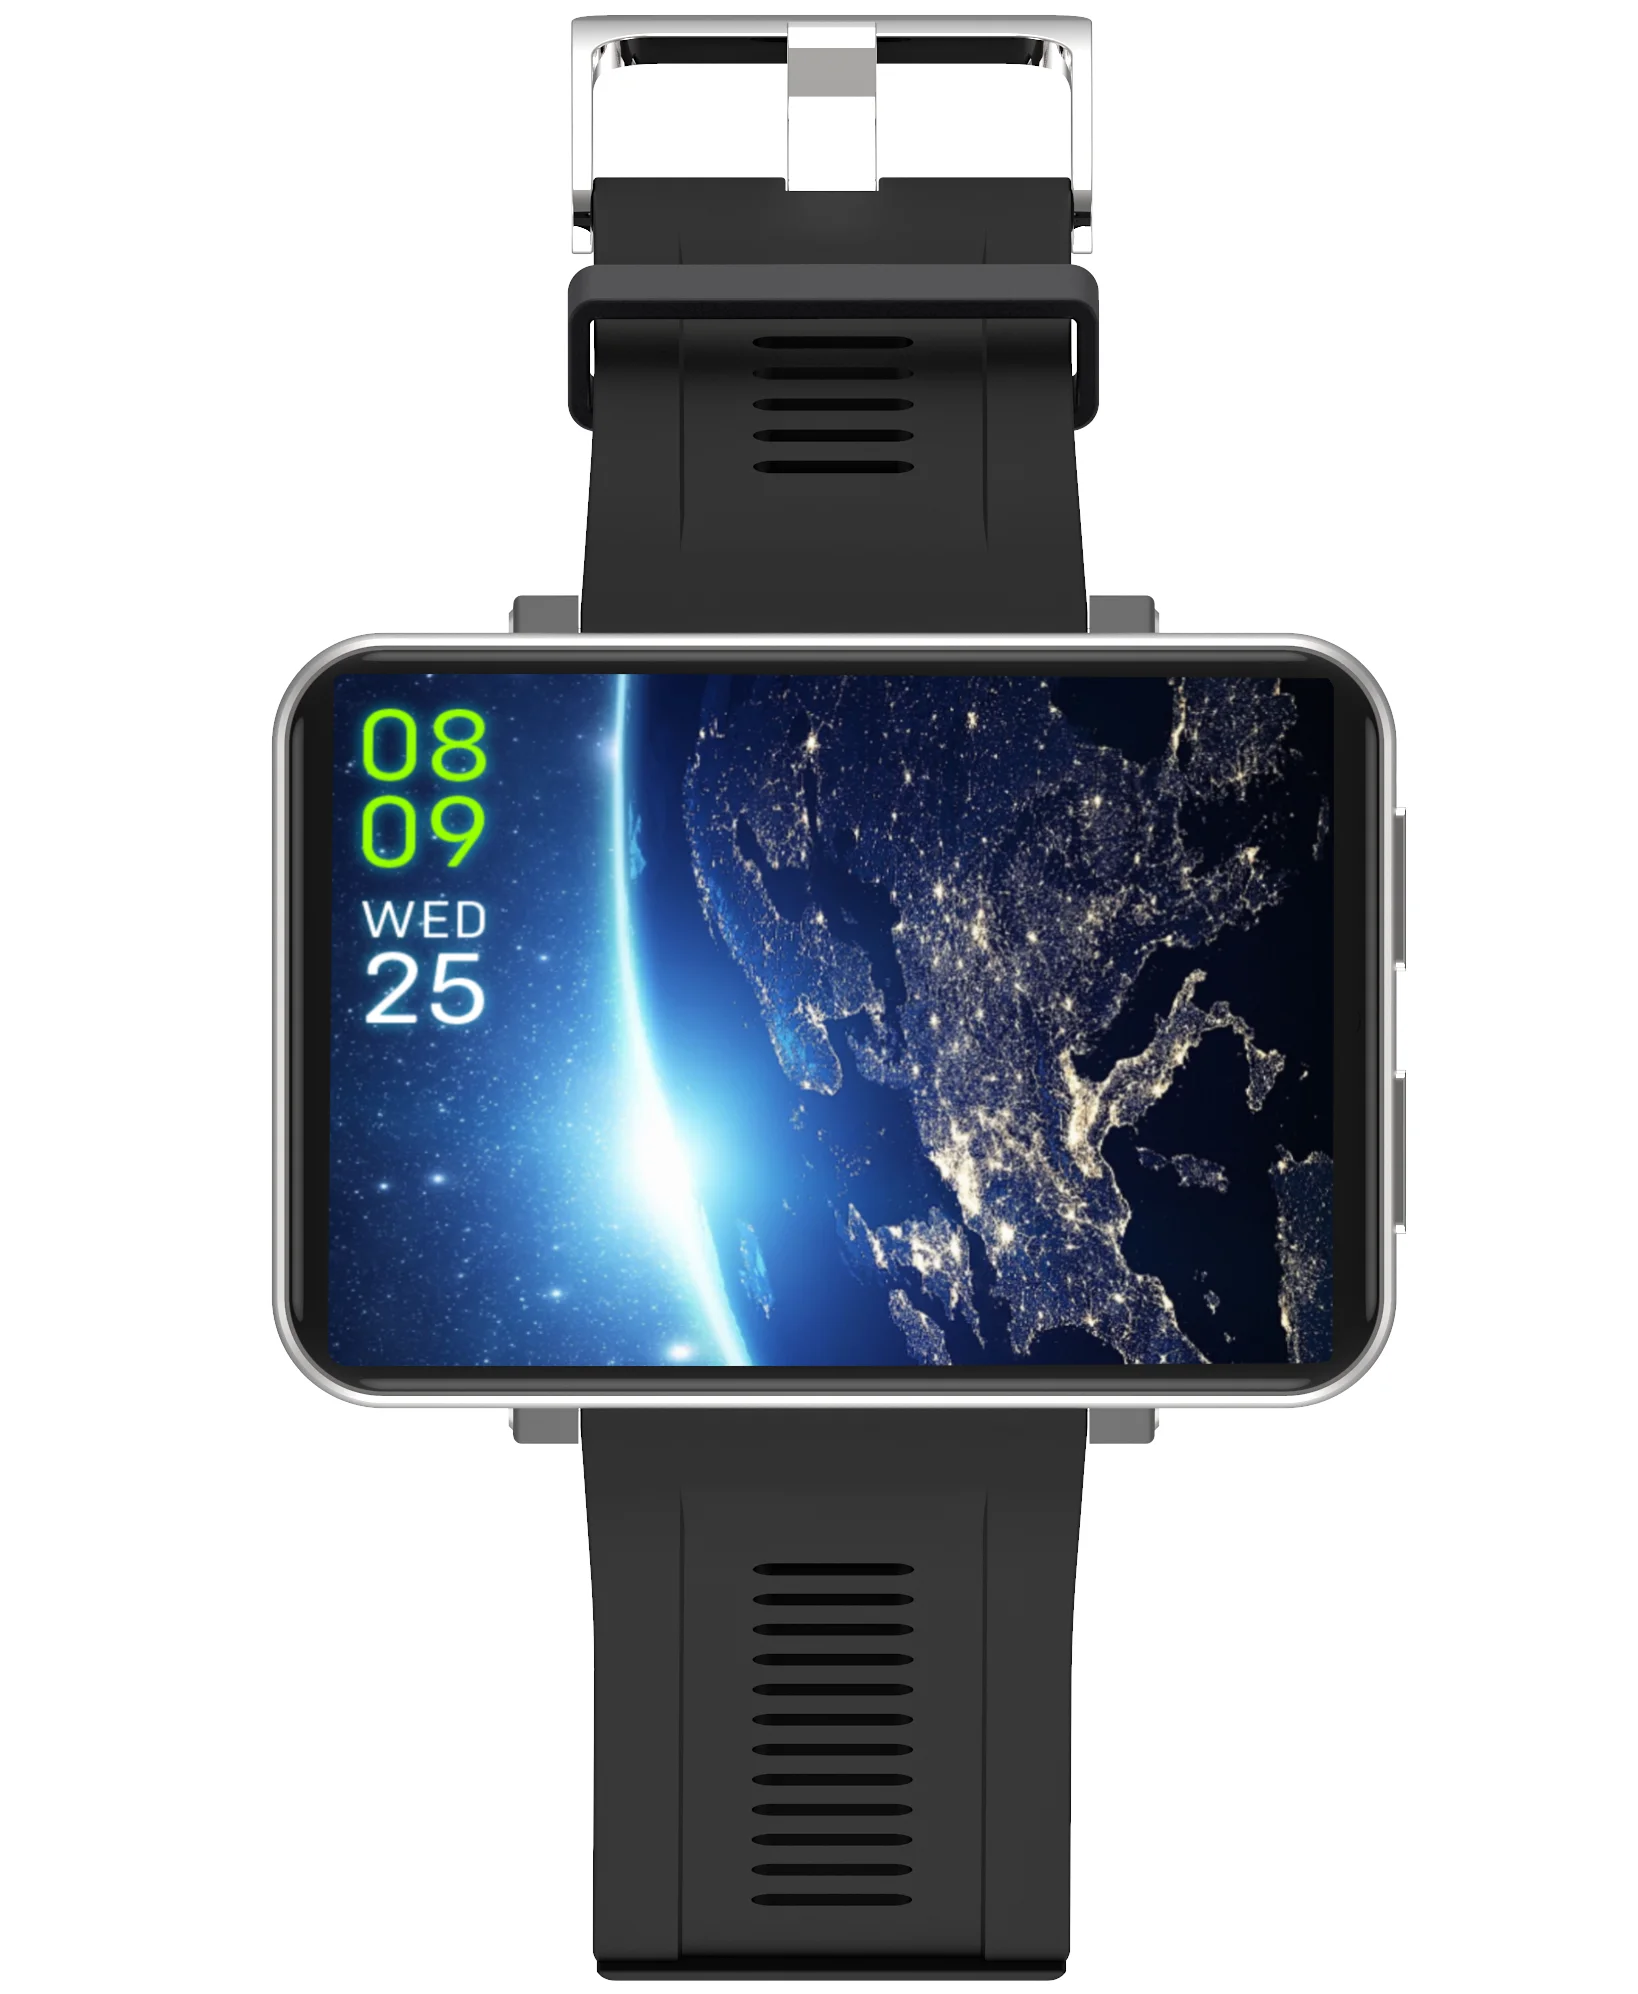 

DM100 4G LTE Smart Watch Men Women Phone Android 7.1 3GB 32GB 5MP MT6739 2700mAh GPS Fashionable Smartwatch PK I5 Plus DM99